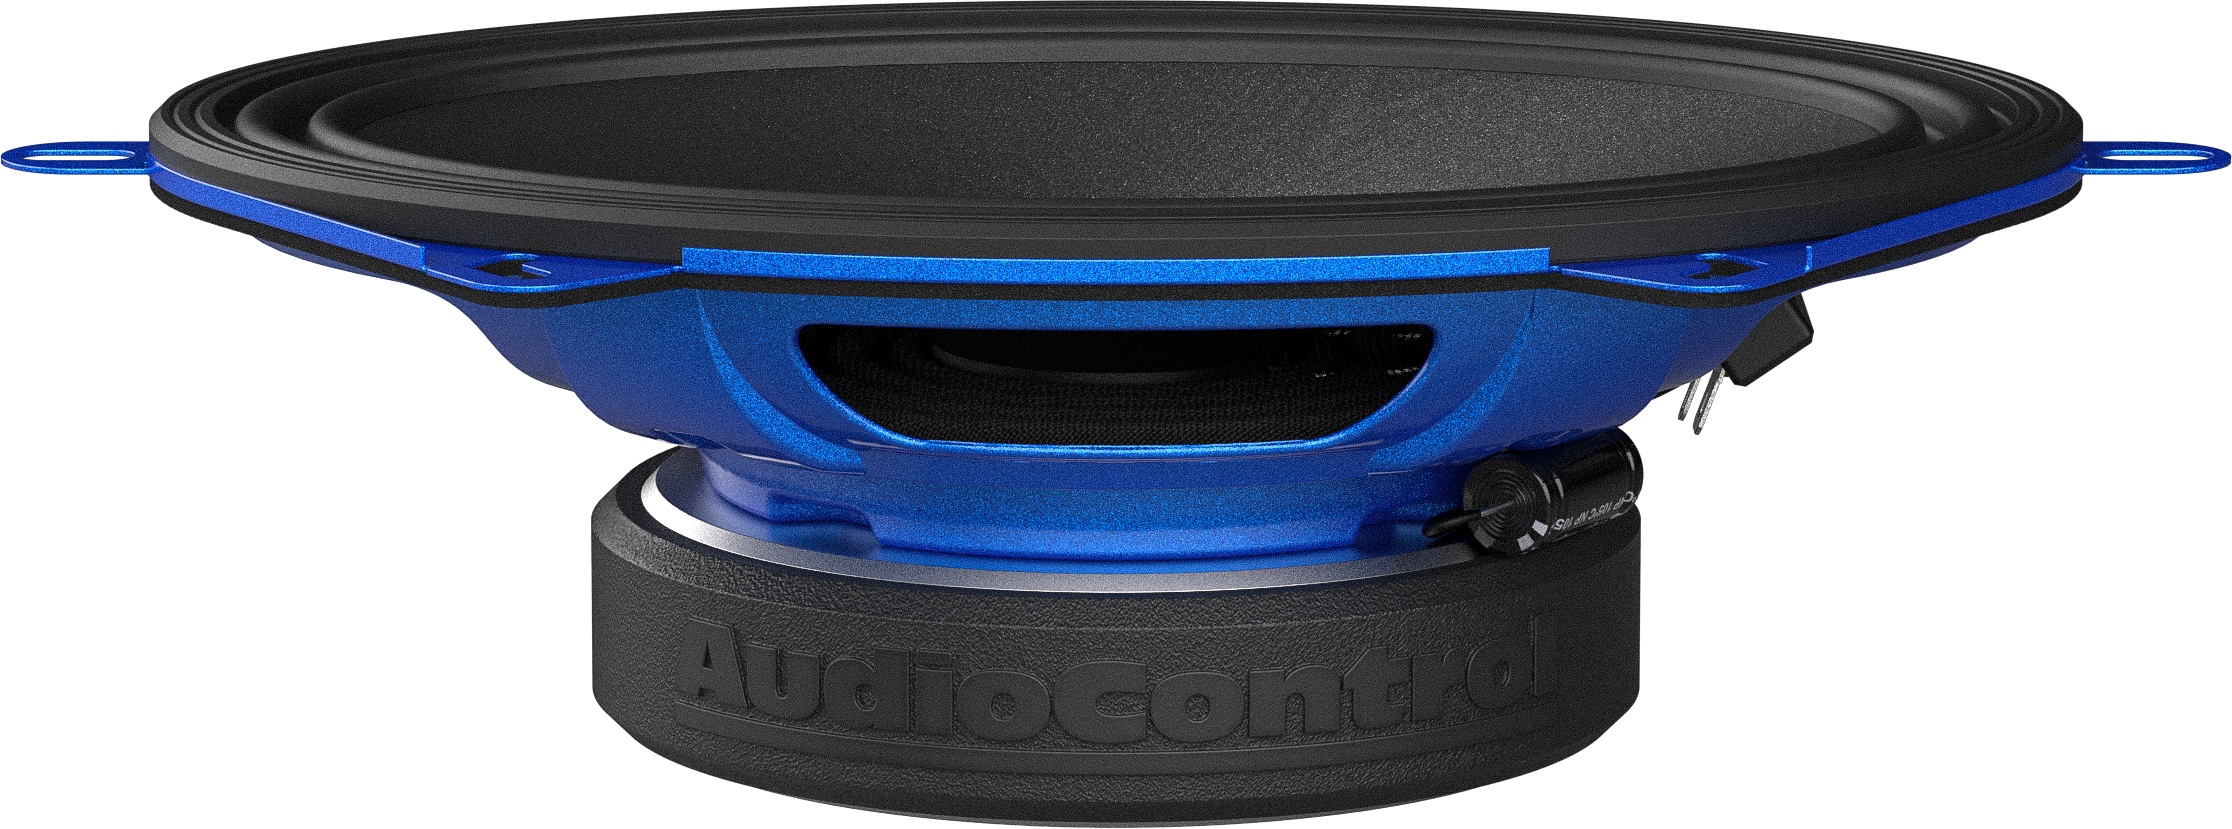 AudioControl PNW Series 5x7" 75 Watt (RMS) High-Fidelity Coaxial Speakers (Pair)